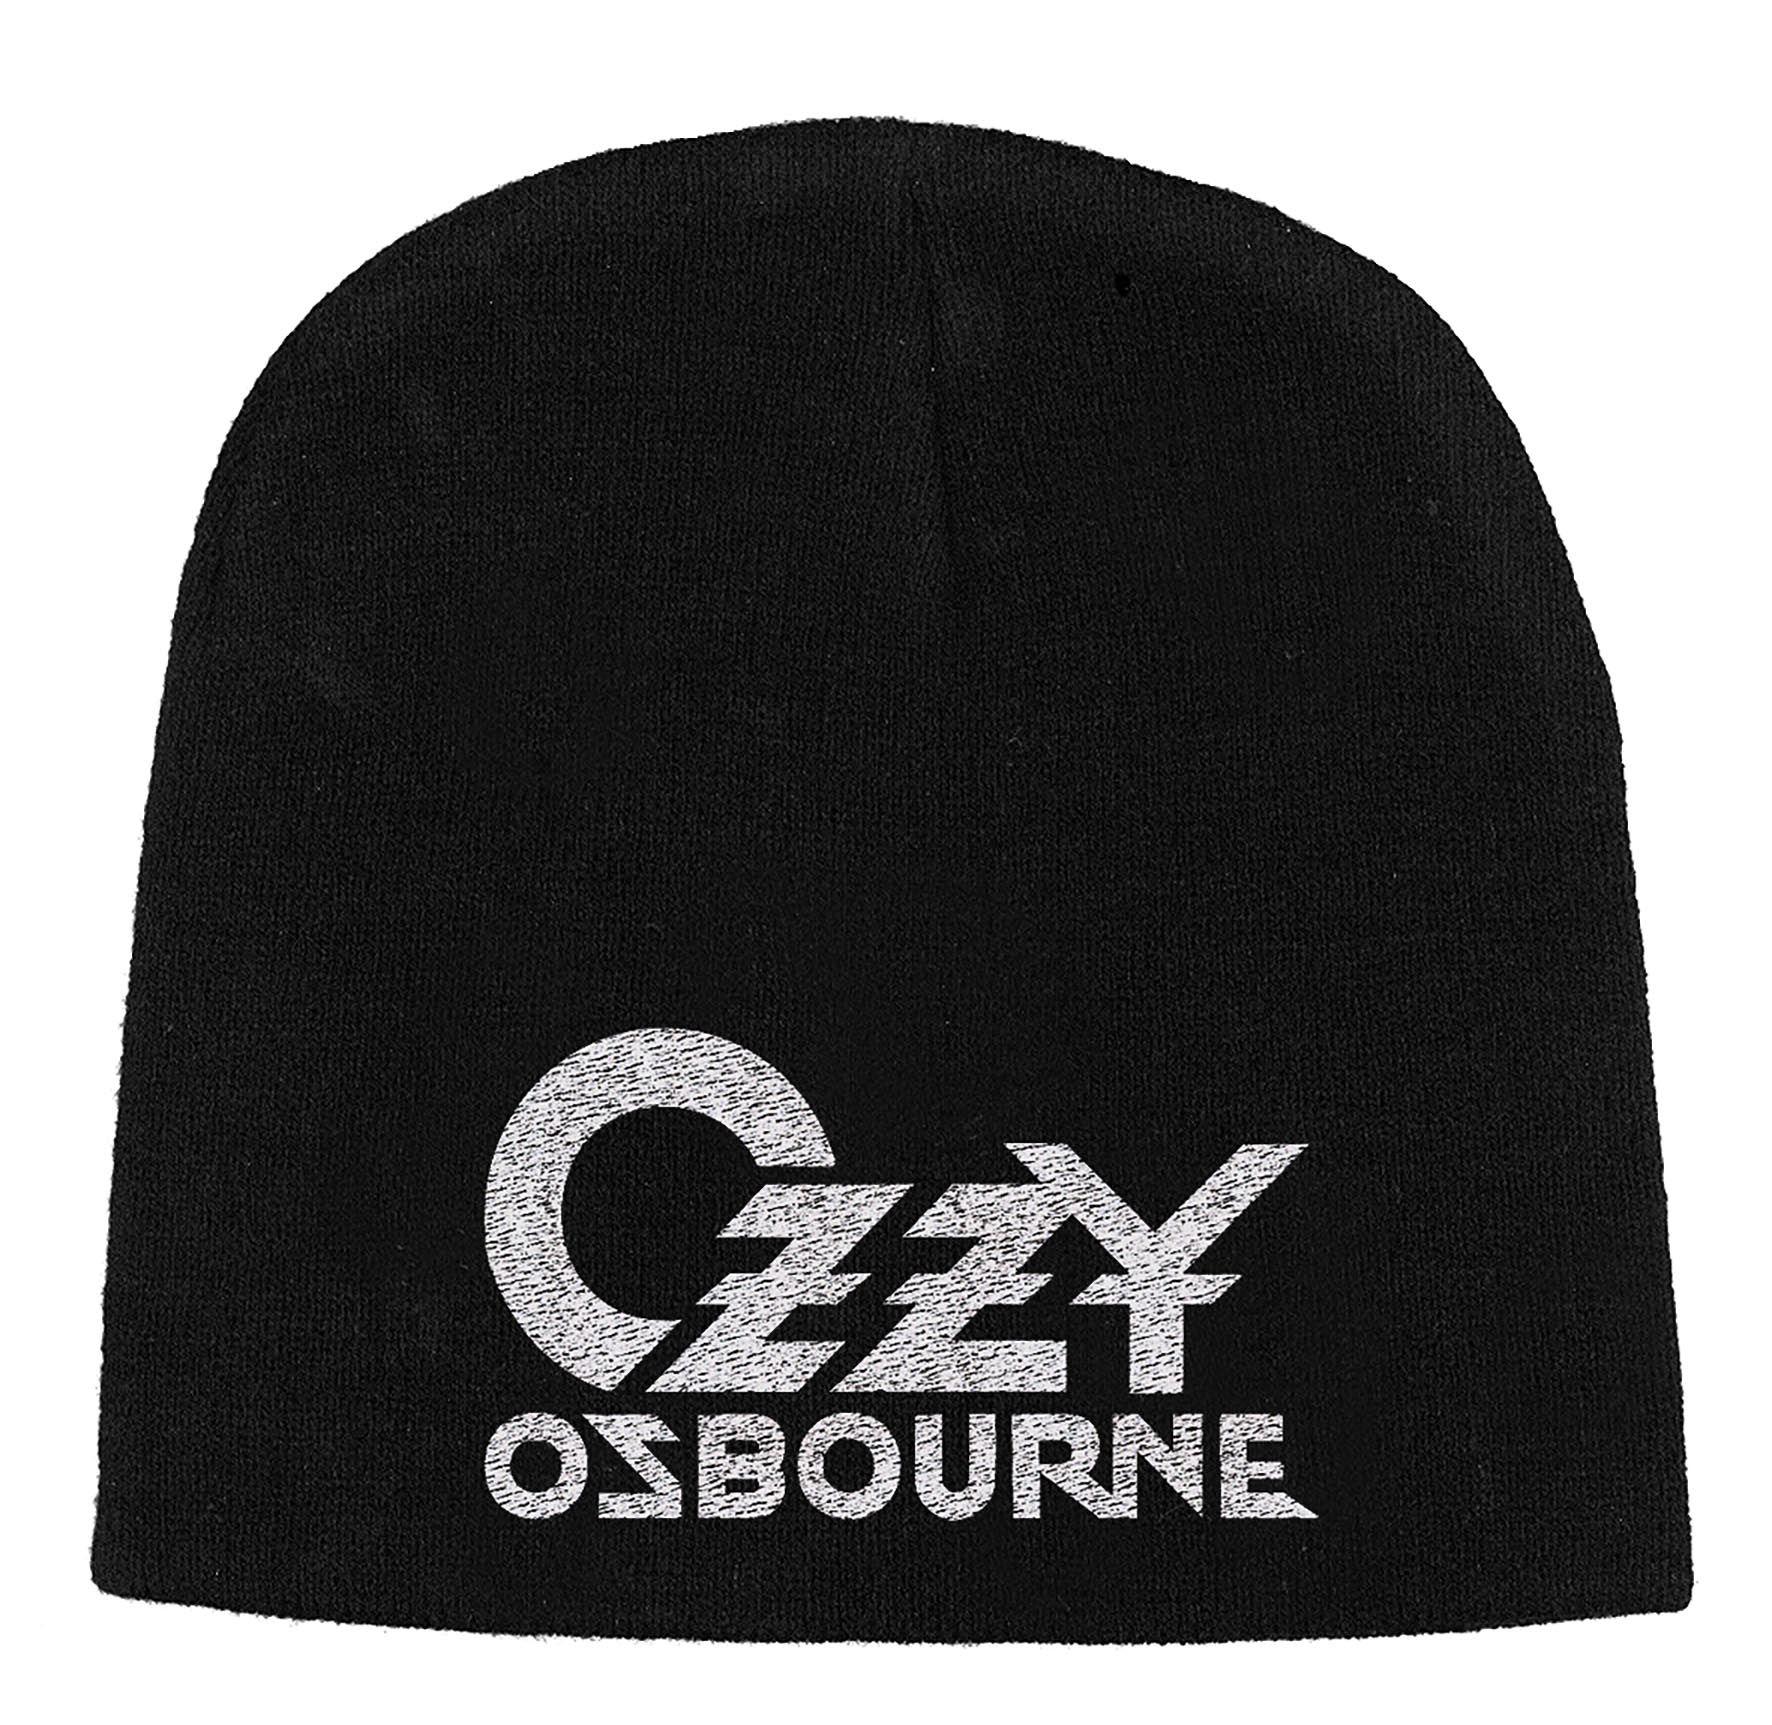 New Ozzy Logo - OZZY OSBOURNE black beanie hat NEW embroidered logo Christmas Decoration